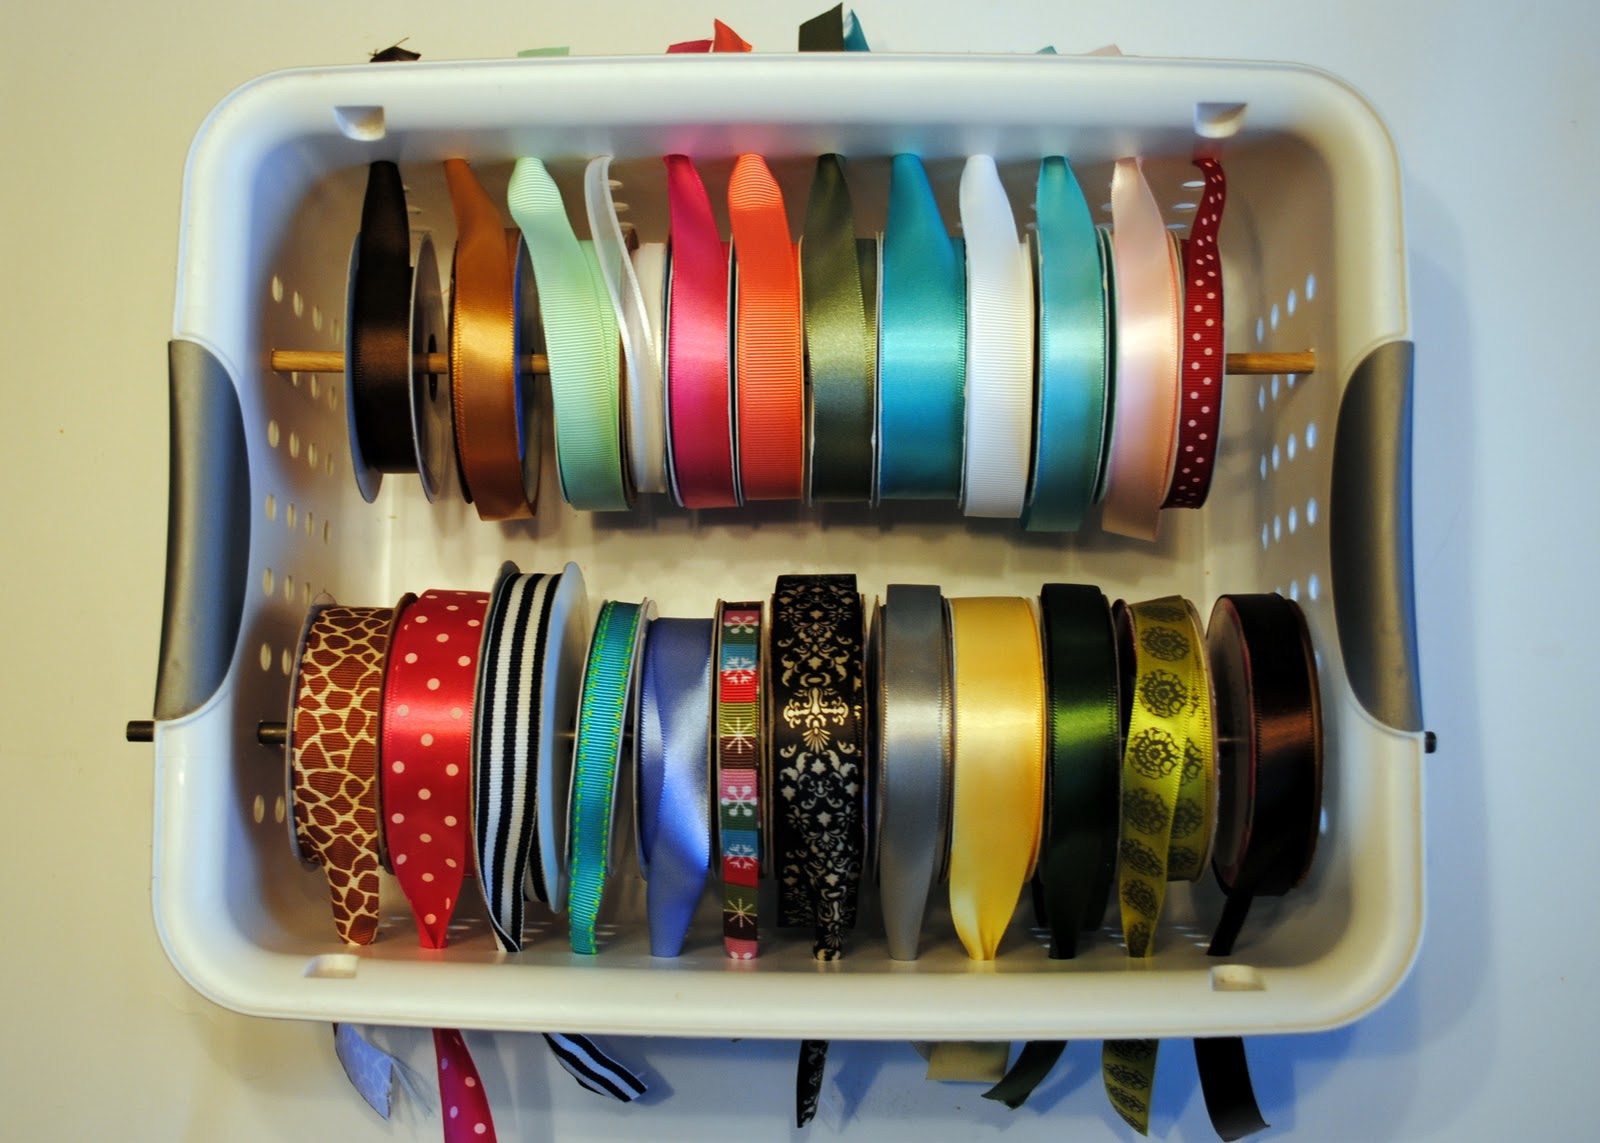 DIY Ribbon Storage Organizers, Racks, & Shelves - Jennifer Maker